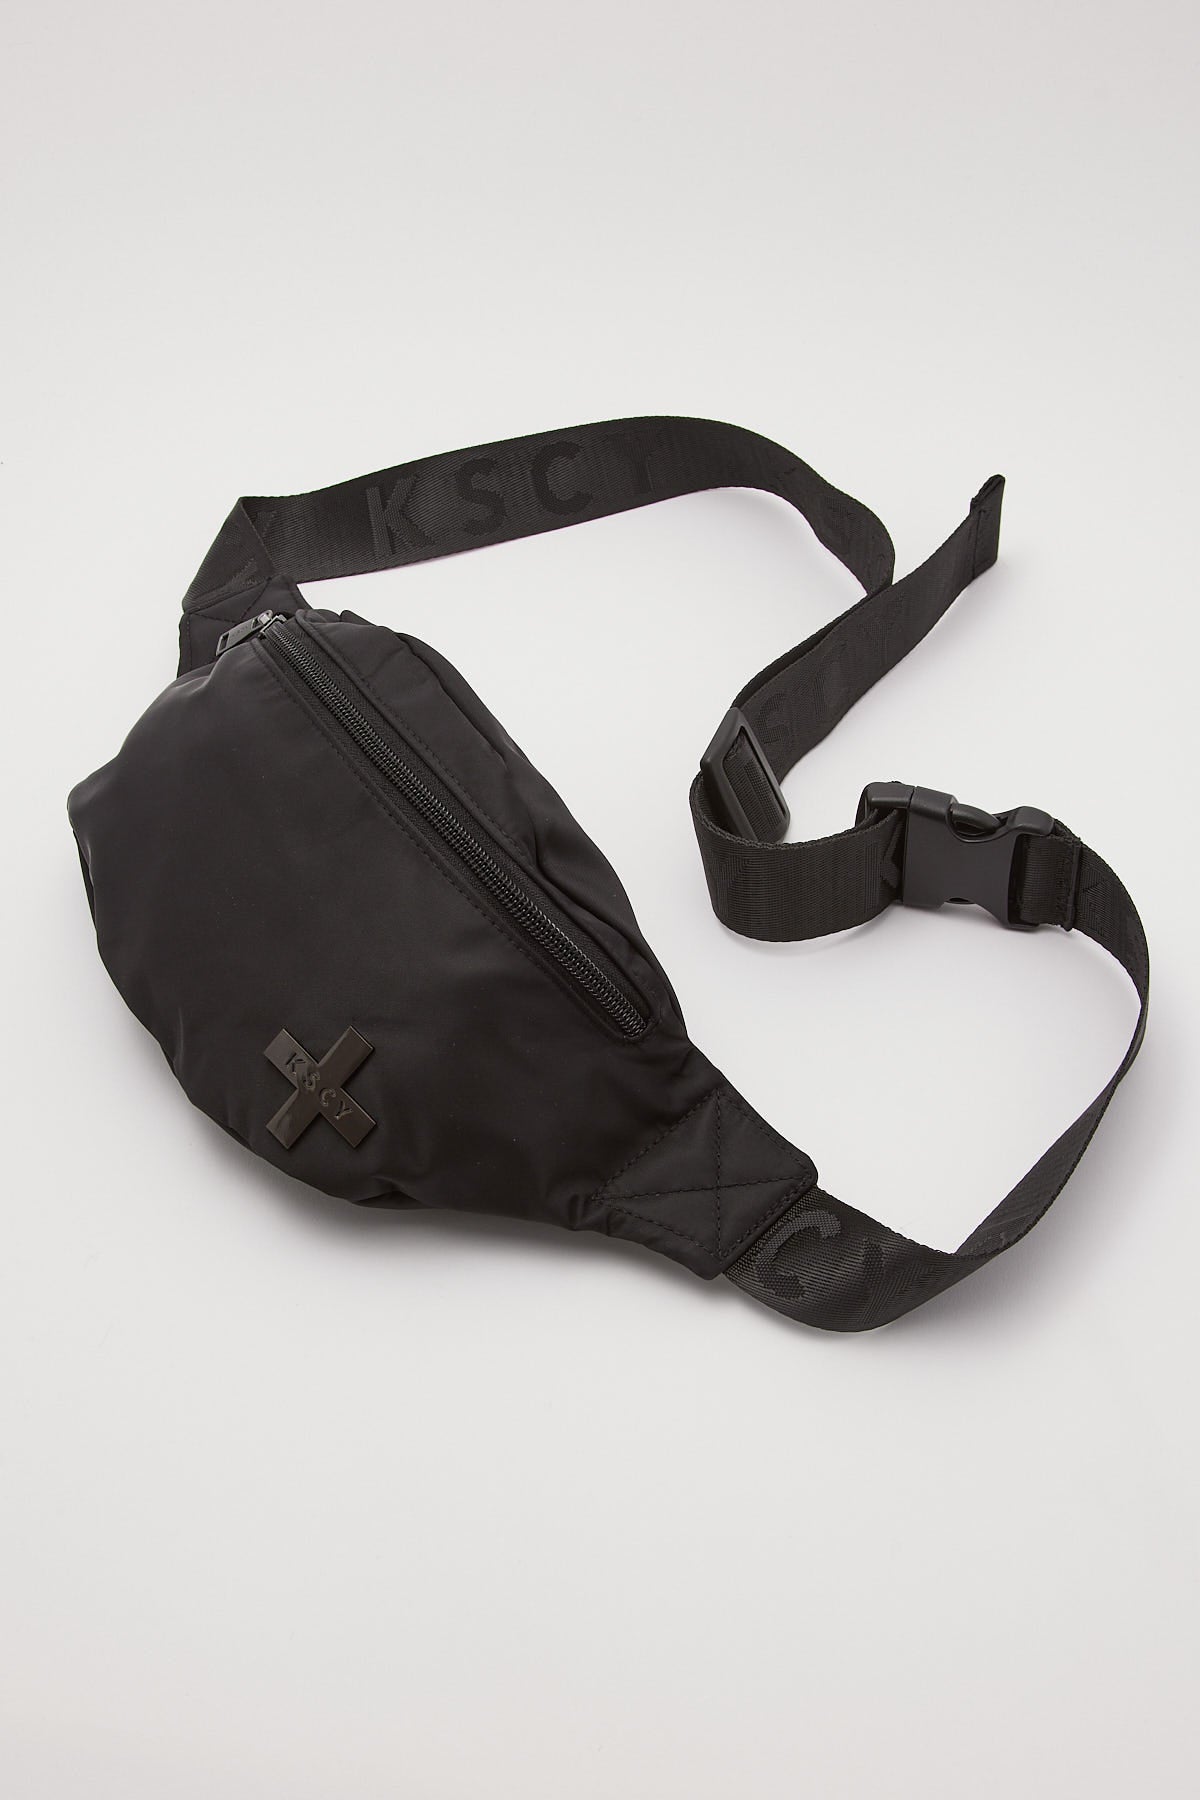 Kiss Chacey Heathen Bum Bag Black – Universal Store